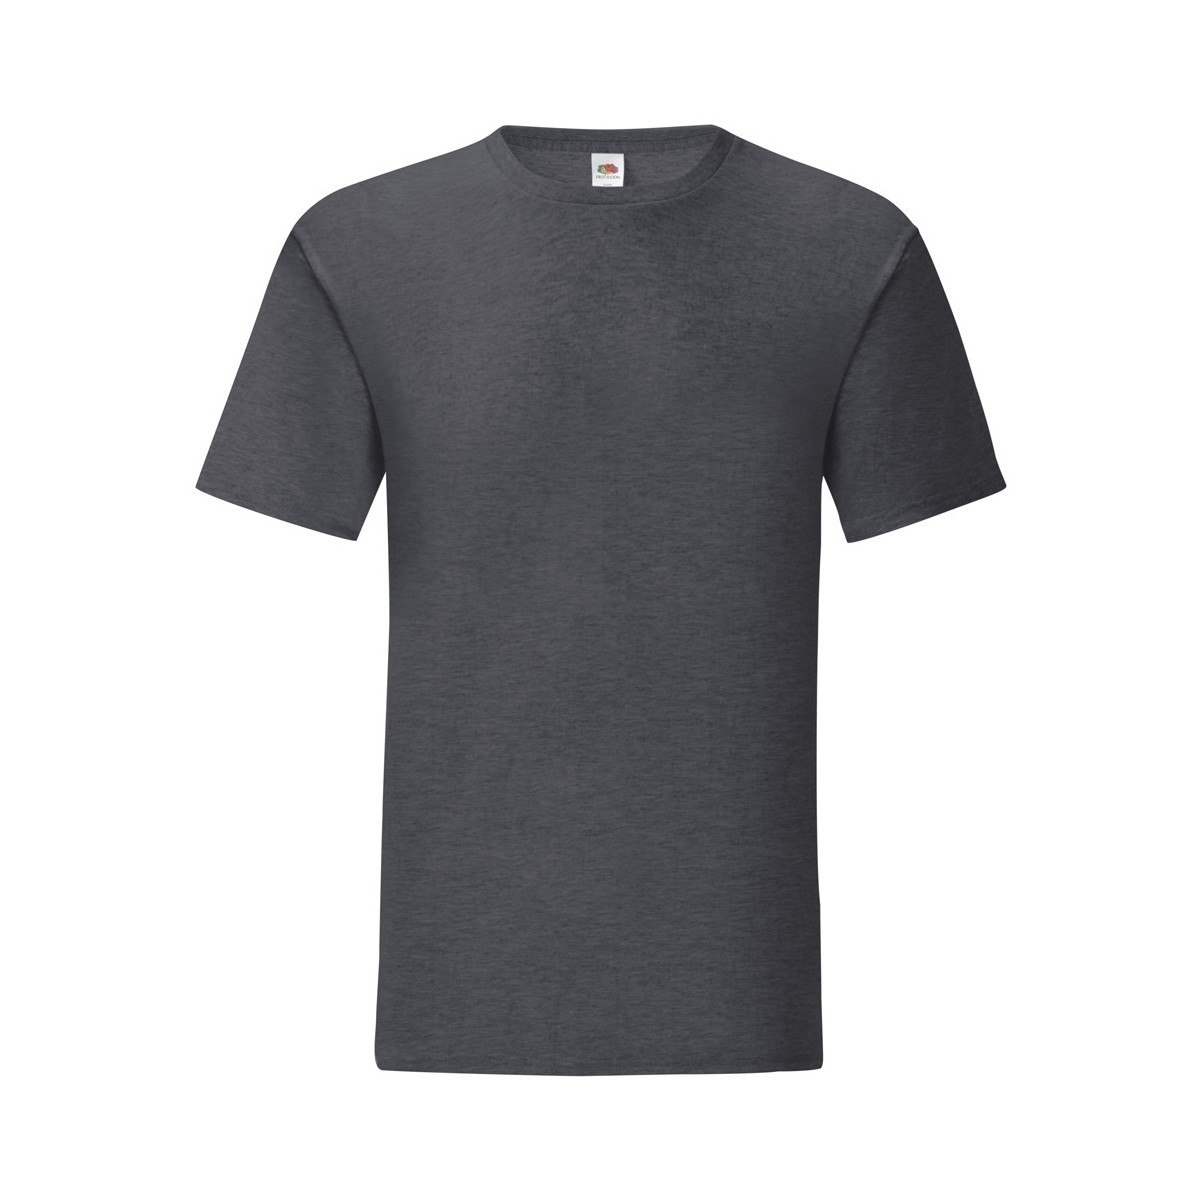 Vêtements Homme T-shirts manches longues Langarm-T-Shirt für Männer aus der Halls of Ivy Kollektion von x IVY PARK Iconic 150 Gris